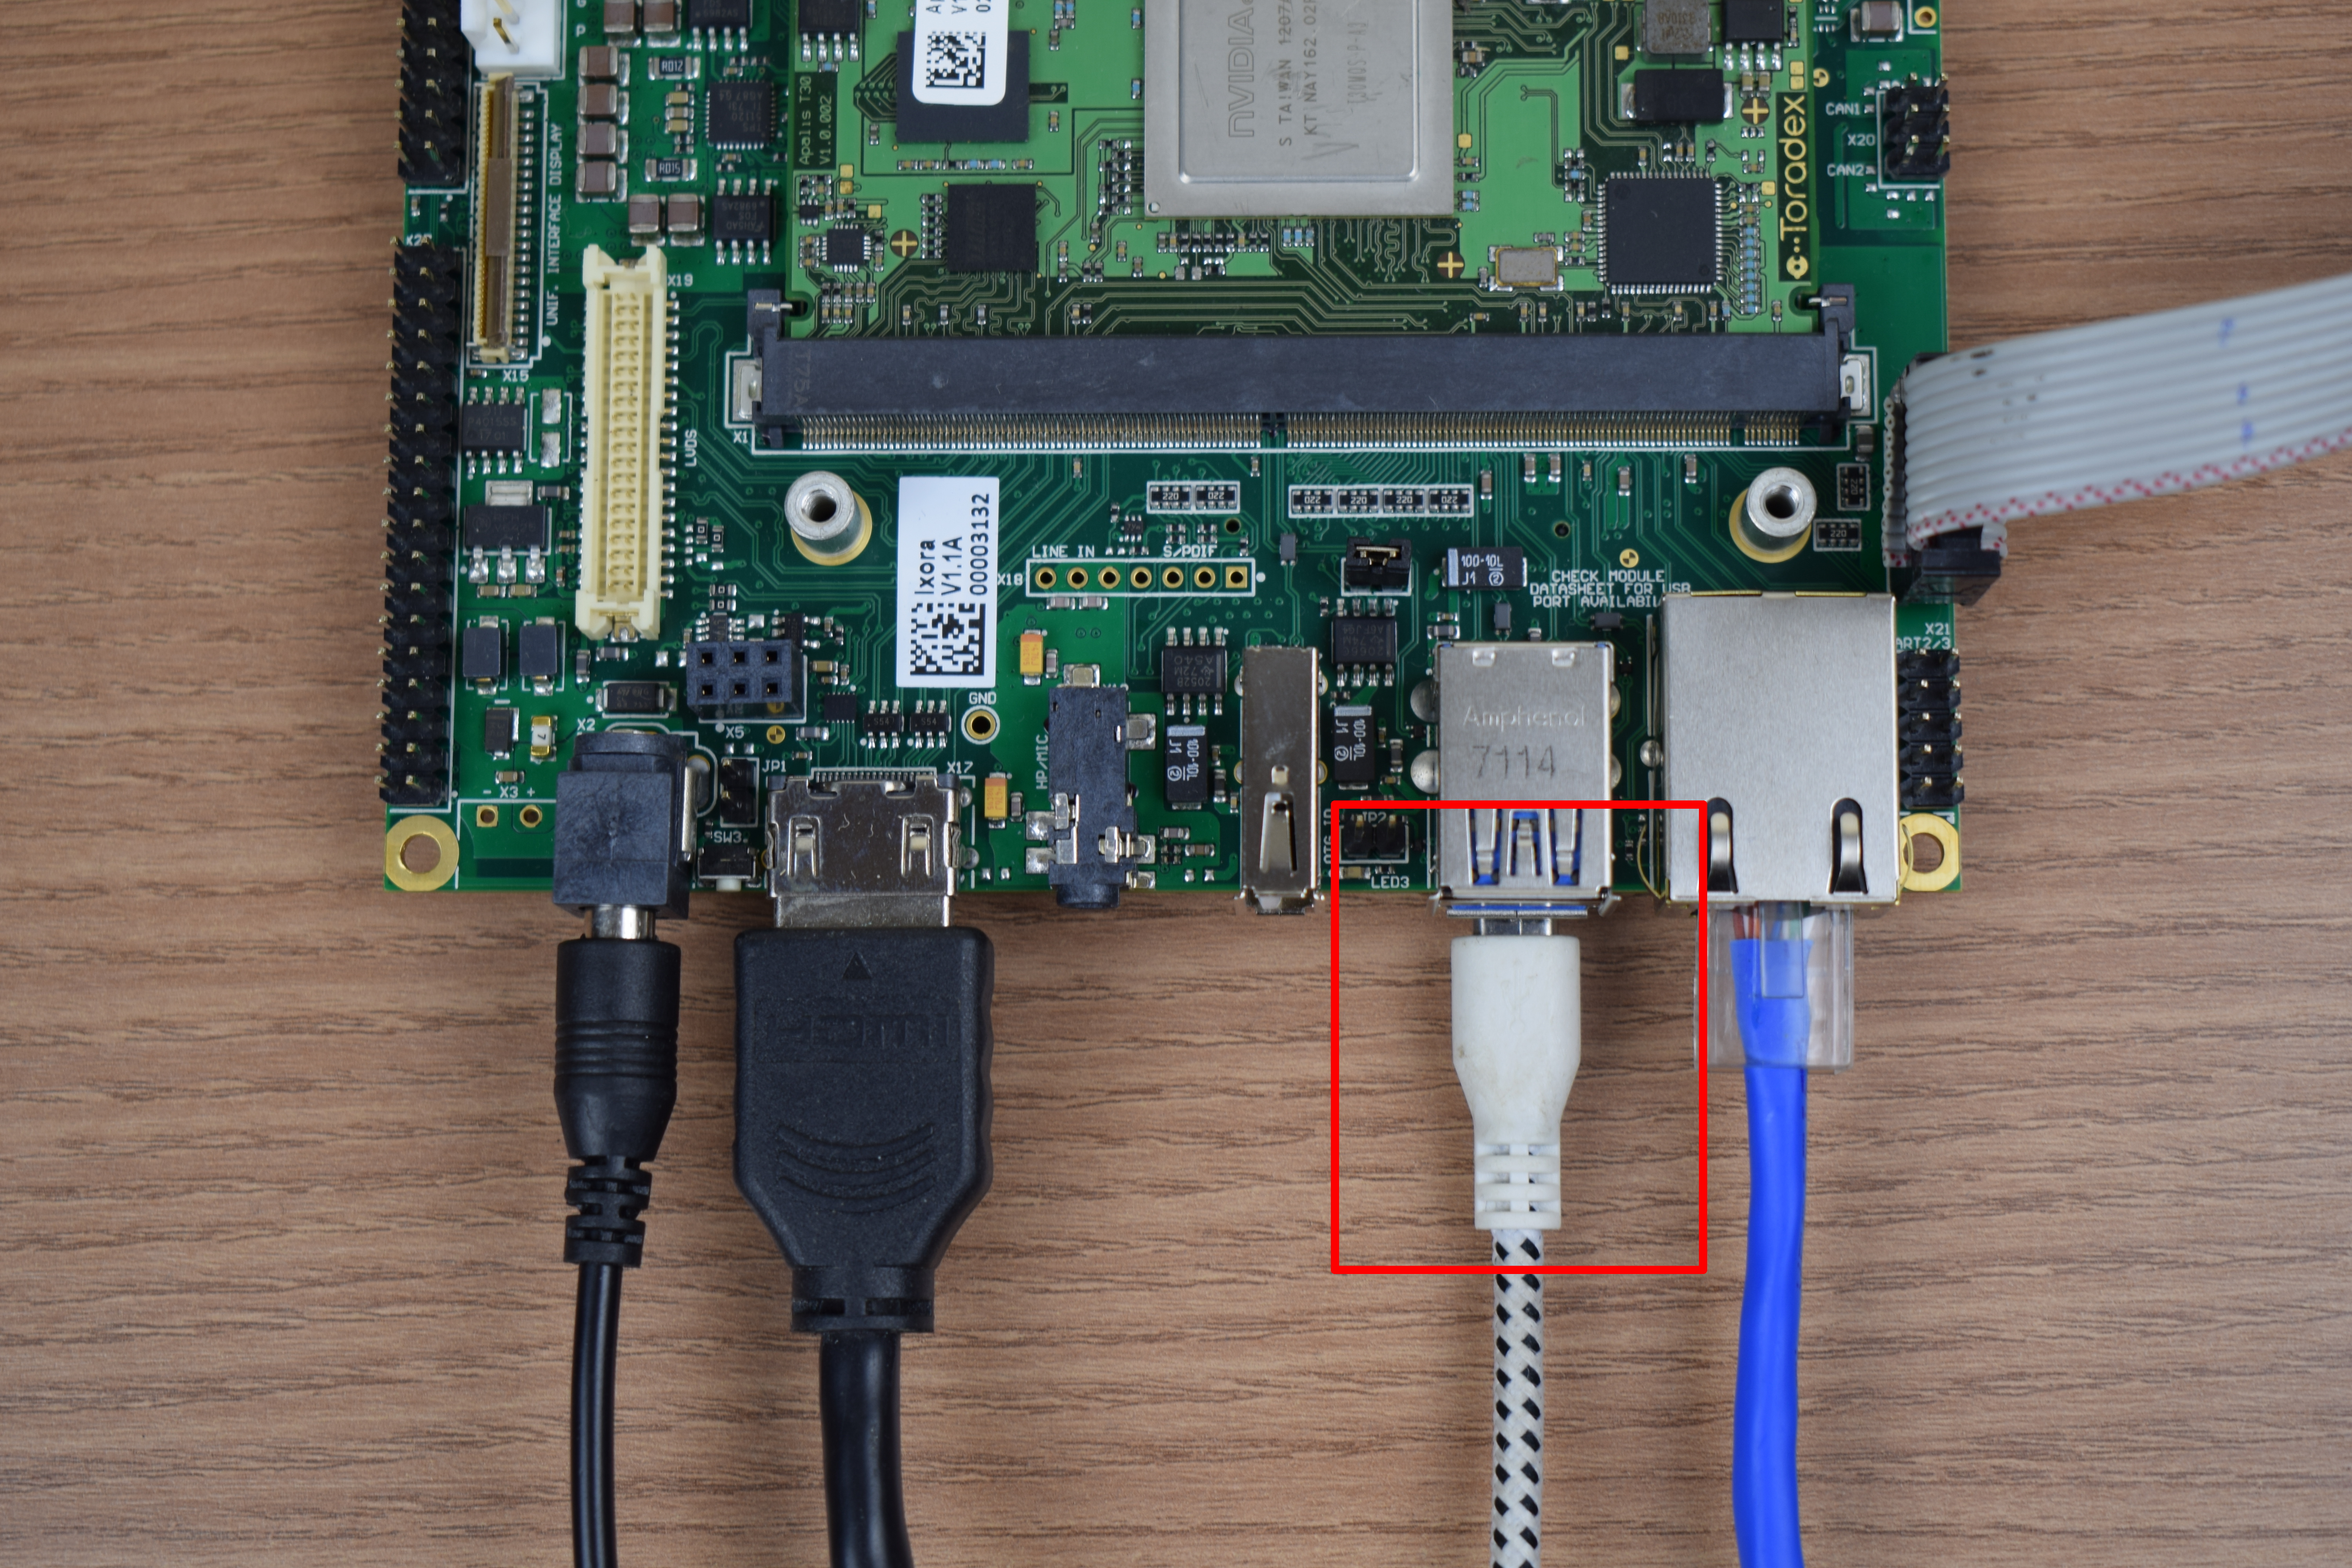 USB A to micro USB B highlighted